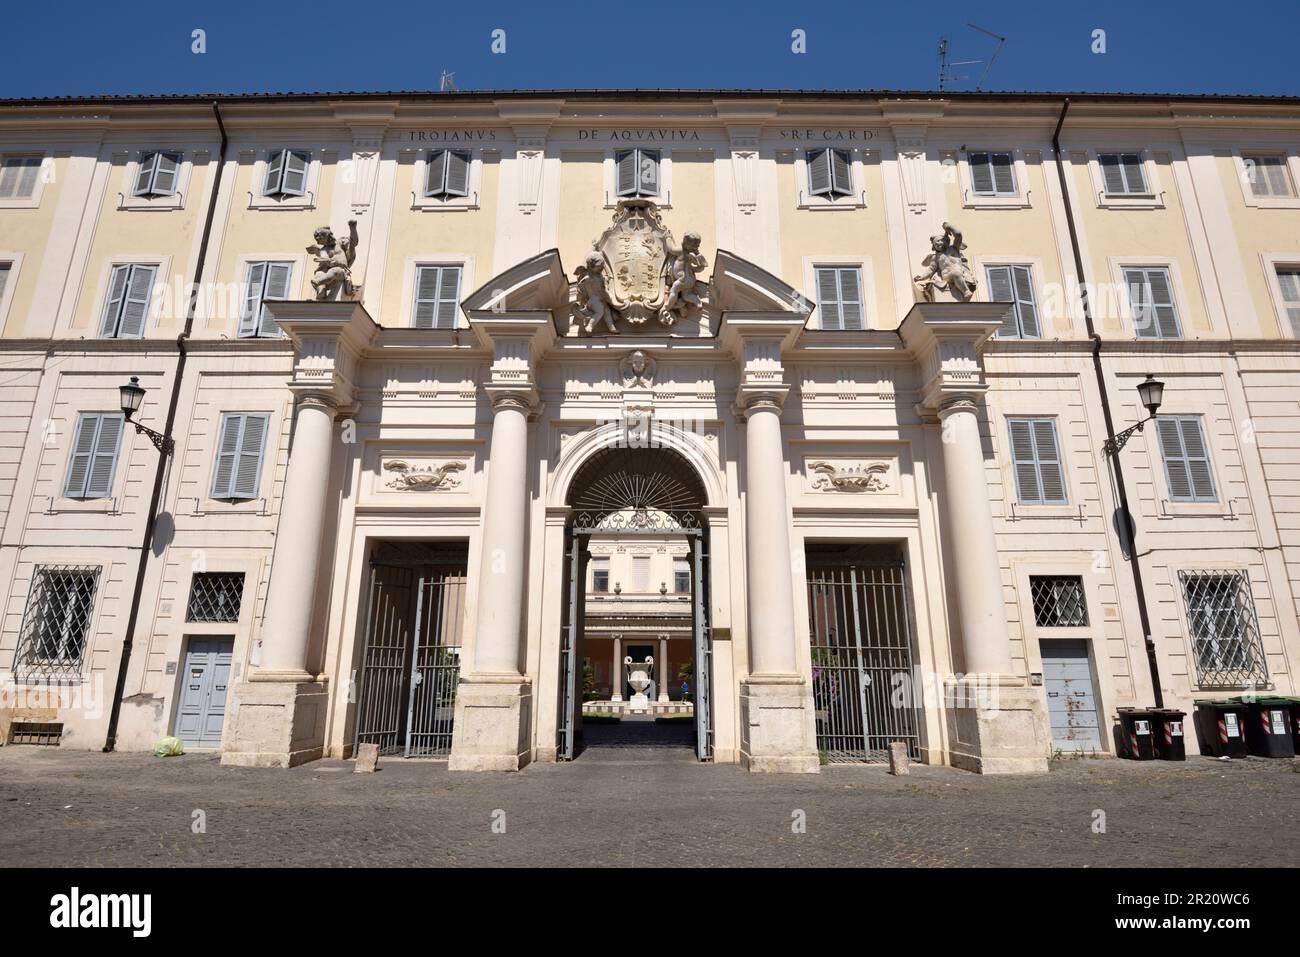 Italien, Rom, Trastevere, Piazza di Santa Cecilia, Komplex von Santa Cecilia in Trastevere, Kloster monumentalen Eingang Stockfoto